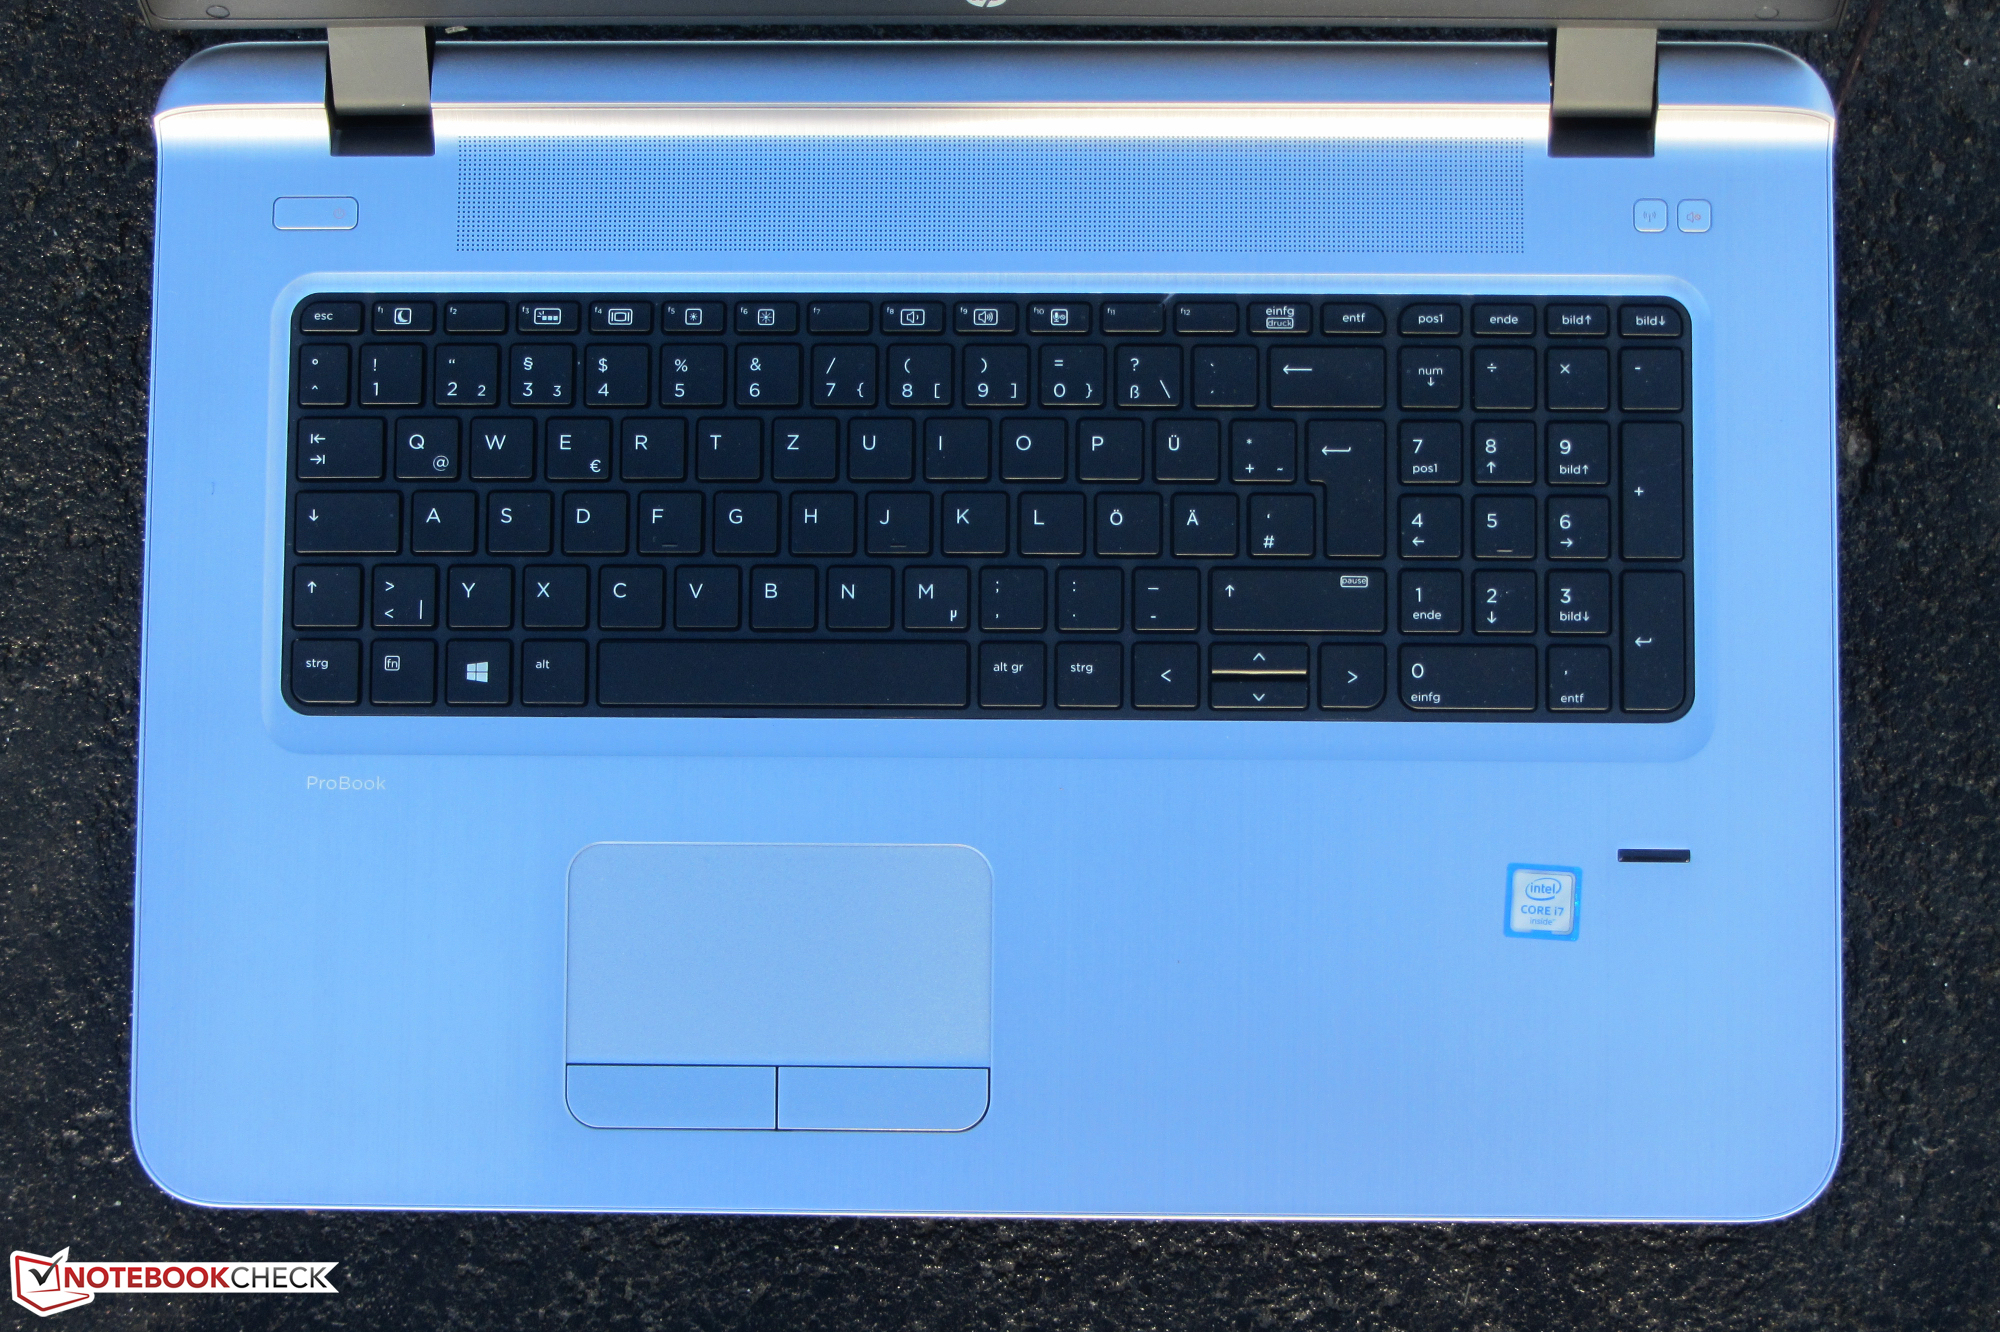 HP ProBook 470 G3 (Core i7-6500U, Radeon R7 M340) Notebook Review